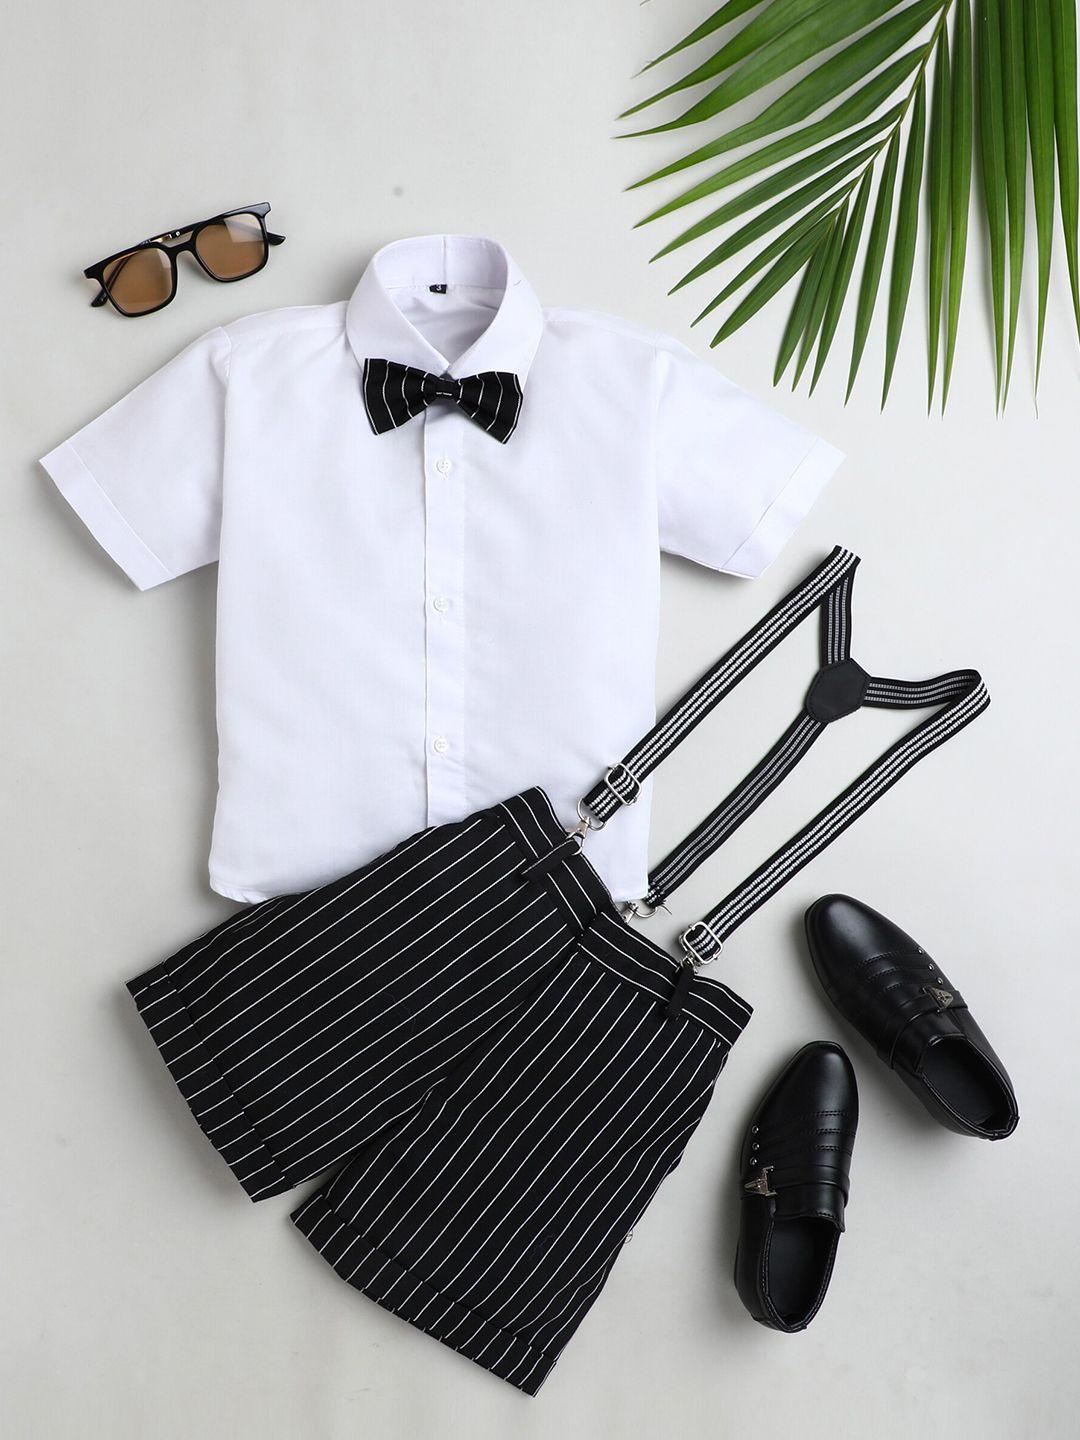 jeetethnics boys black & white shirt & shorts with suspenders